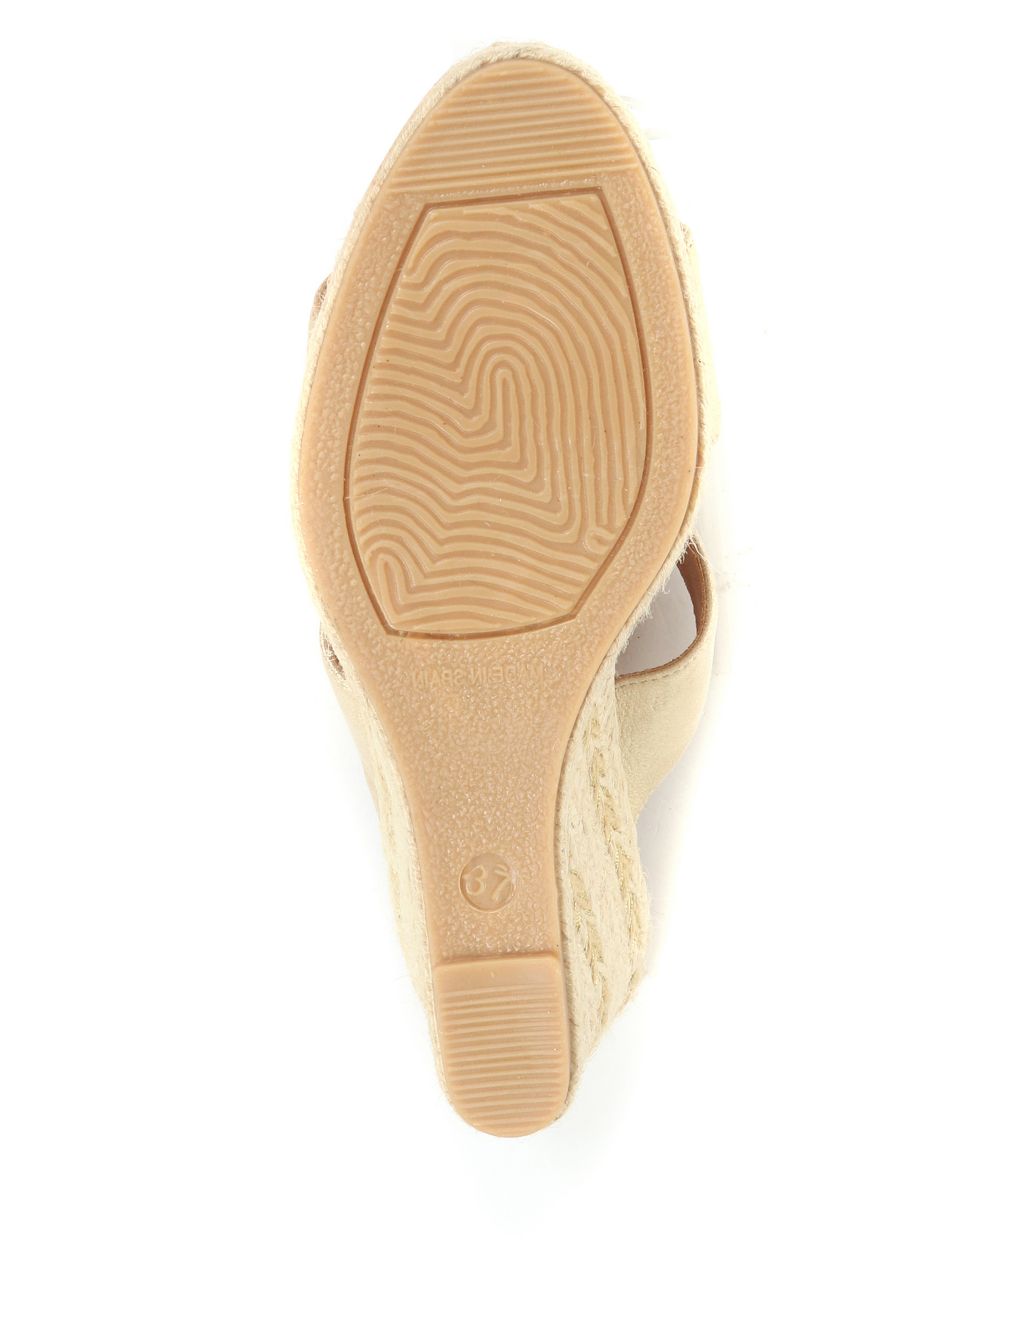 Leather Wedge Heel Espadrille Sandals image 4